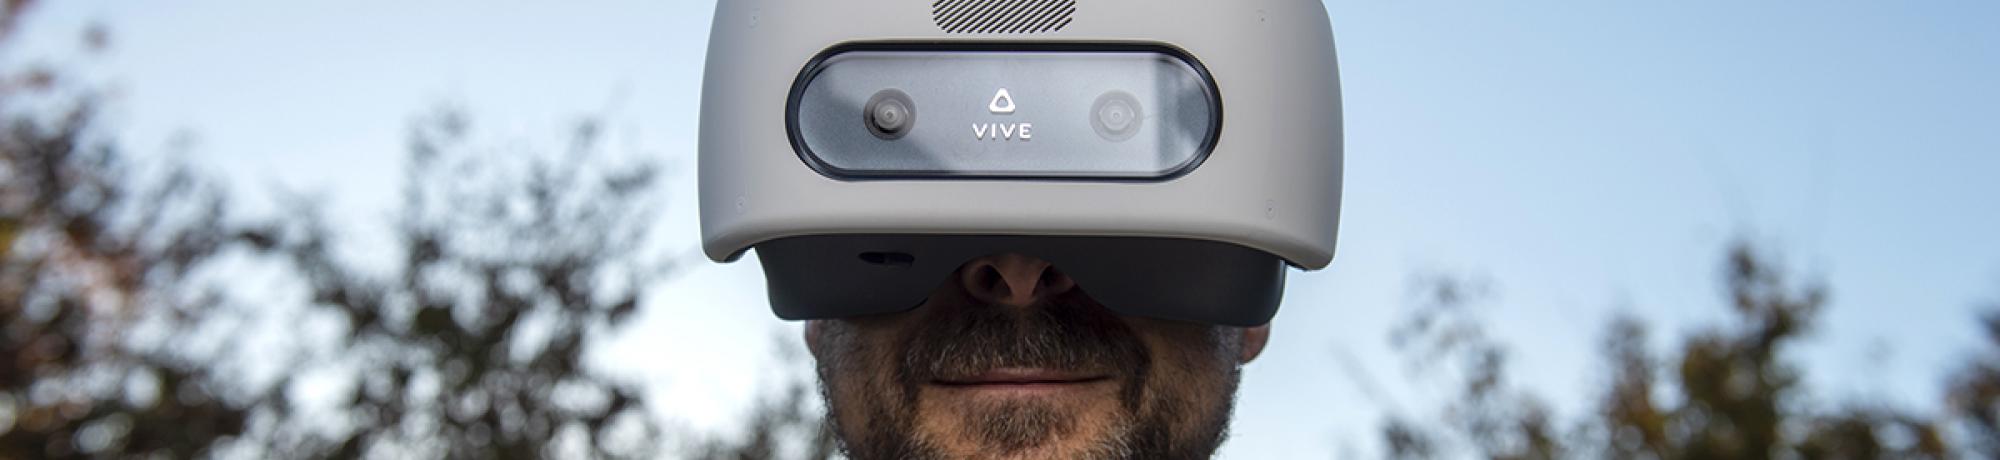 Professor Tony Simon demonstrating his virtual reality healthcare innovation VR device